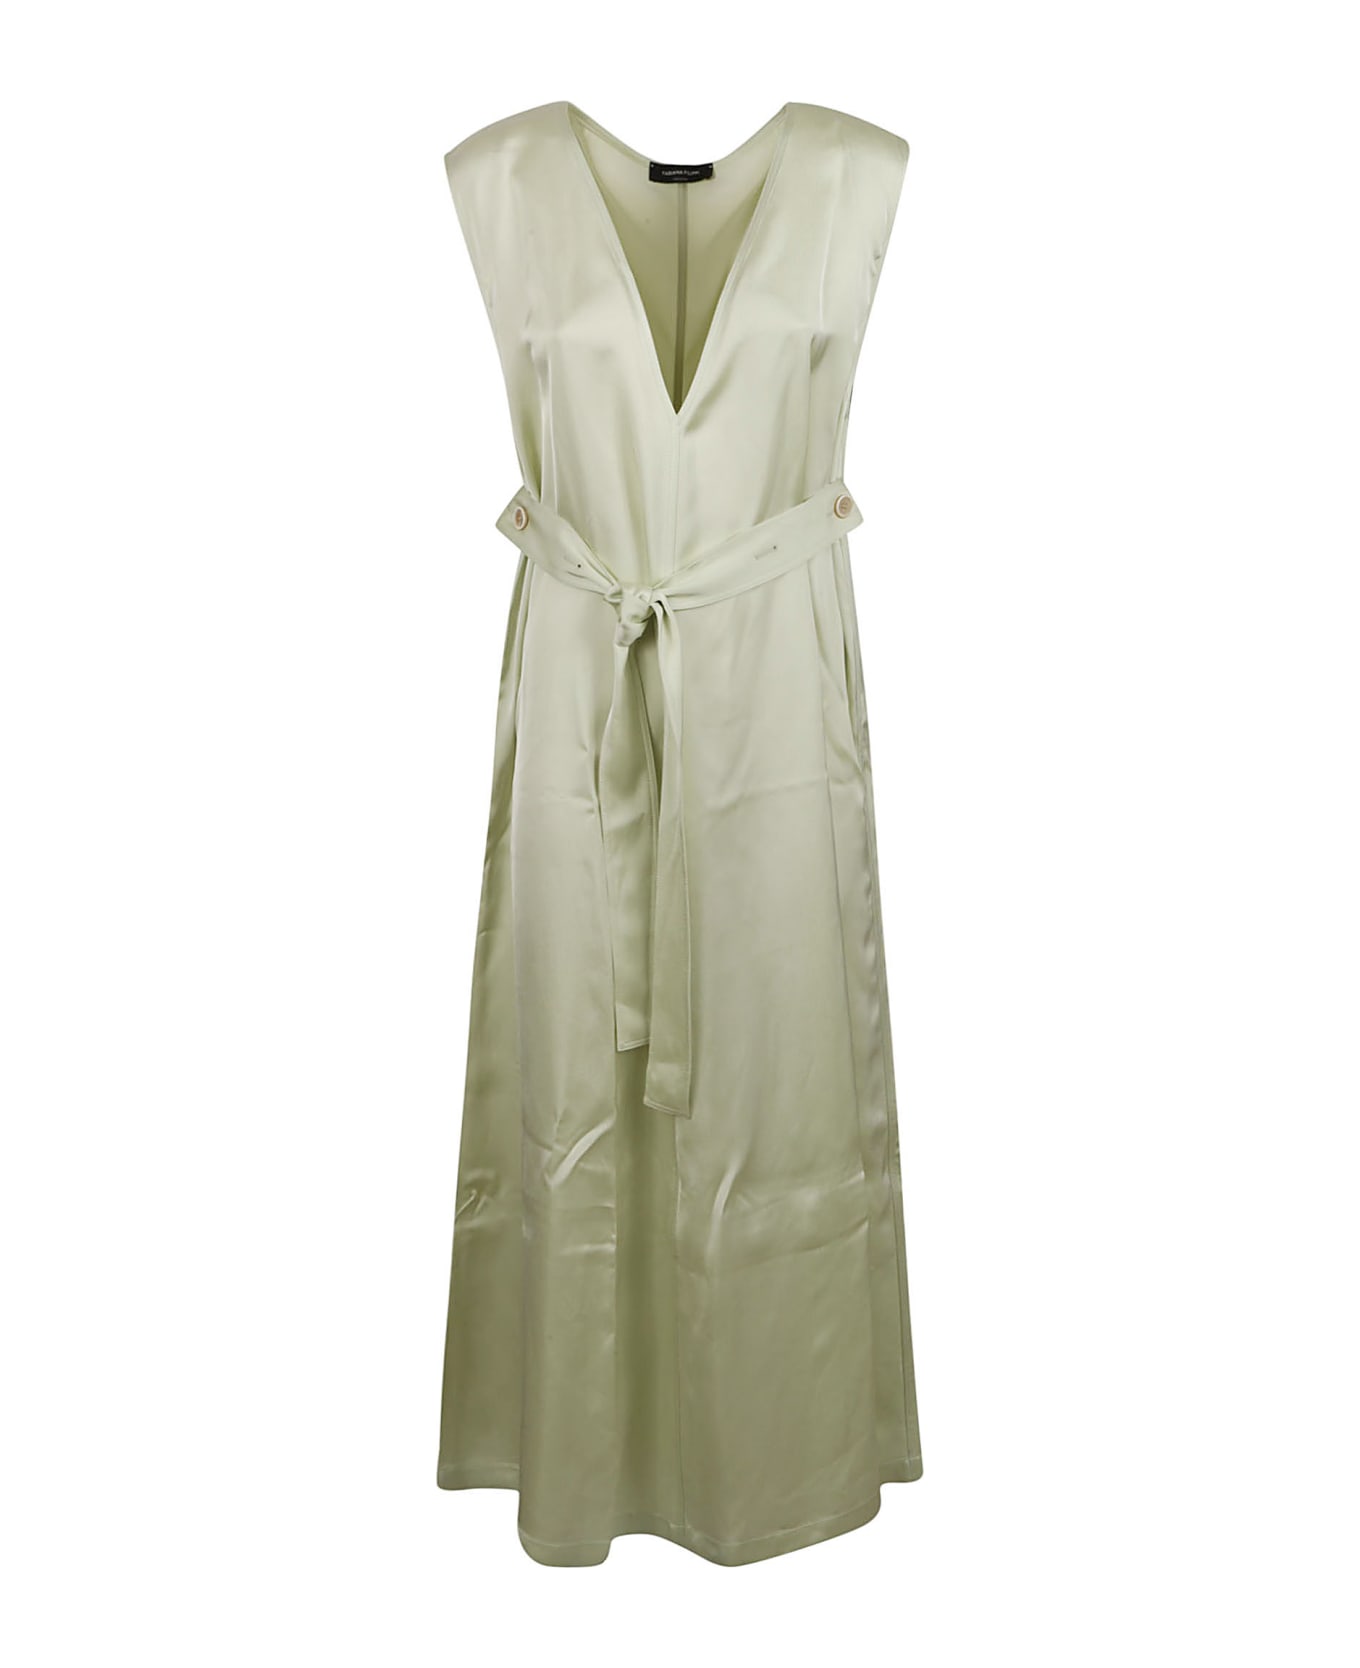 Fabiana Filippi Sleeveless Belted Dress - Light/Pastel Green